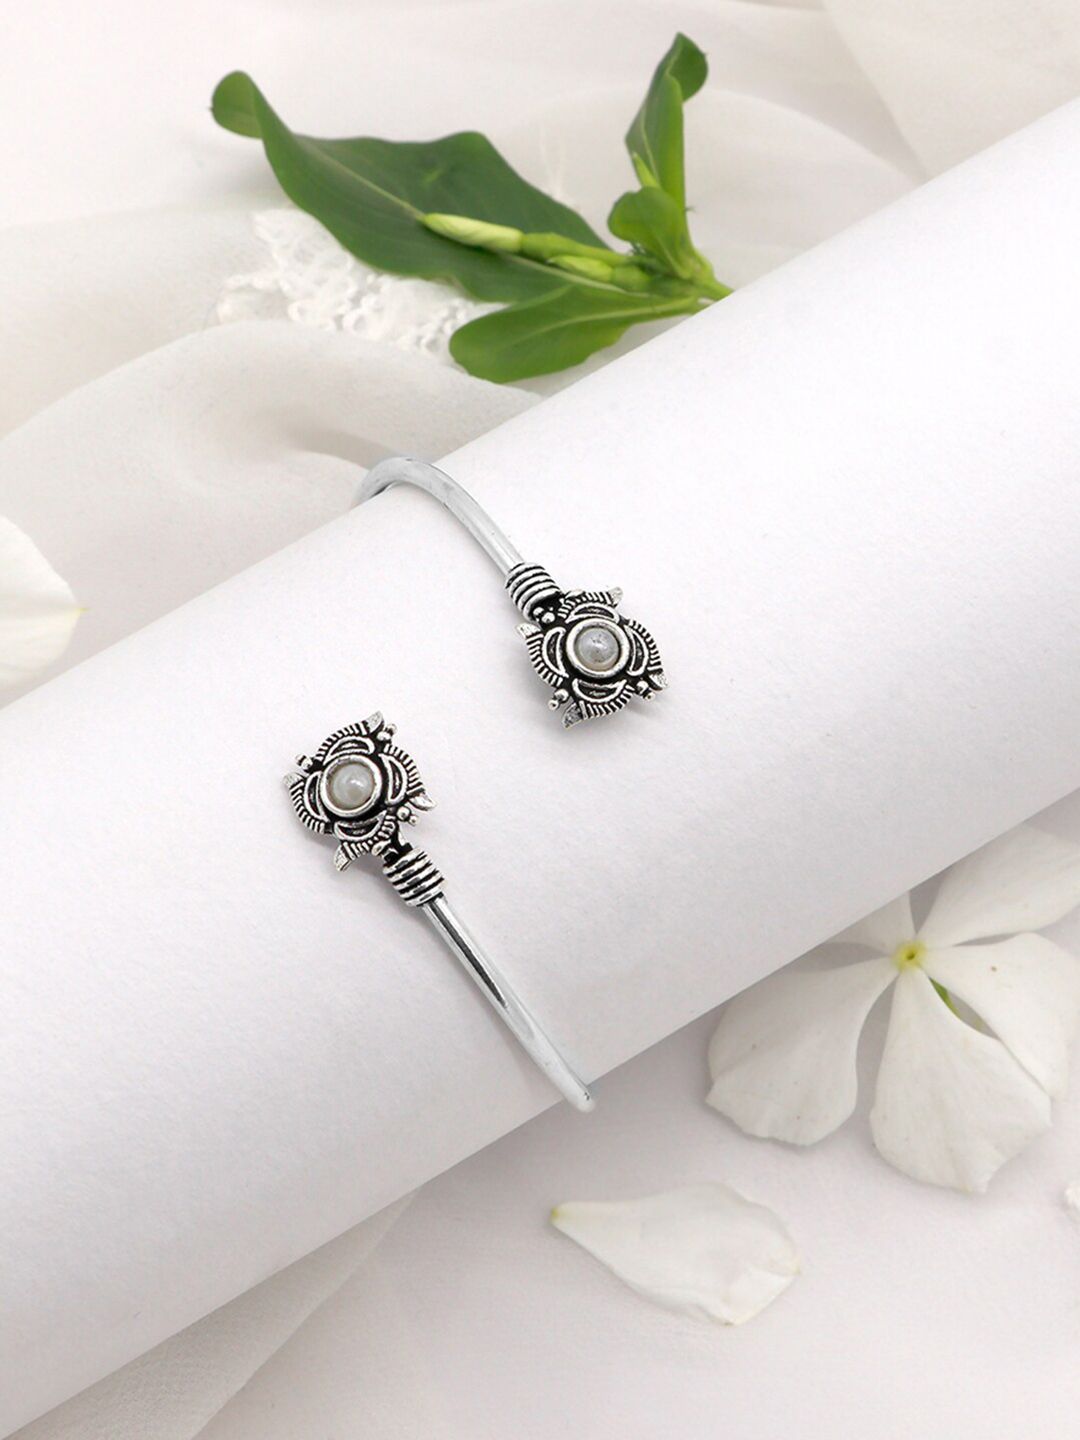 TEEJH Women Silver-Toned Oxidised Silver-Plated Cuff Bracelet Price in India